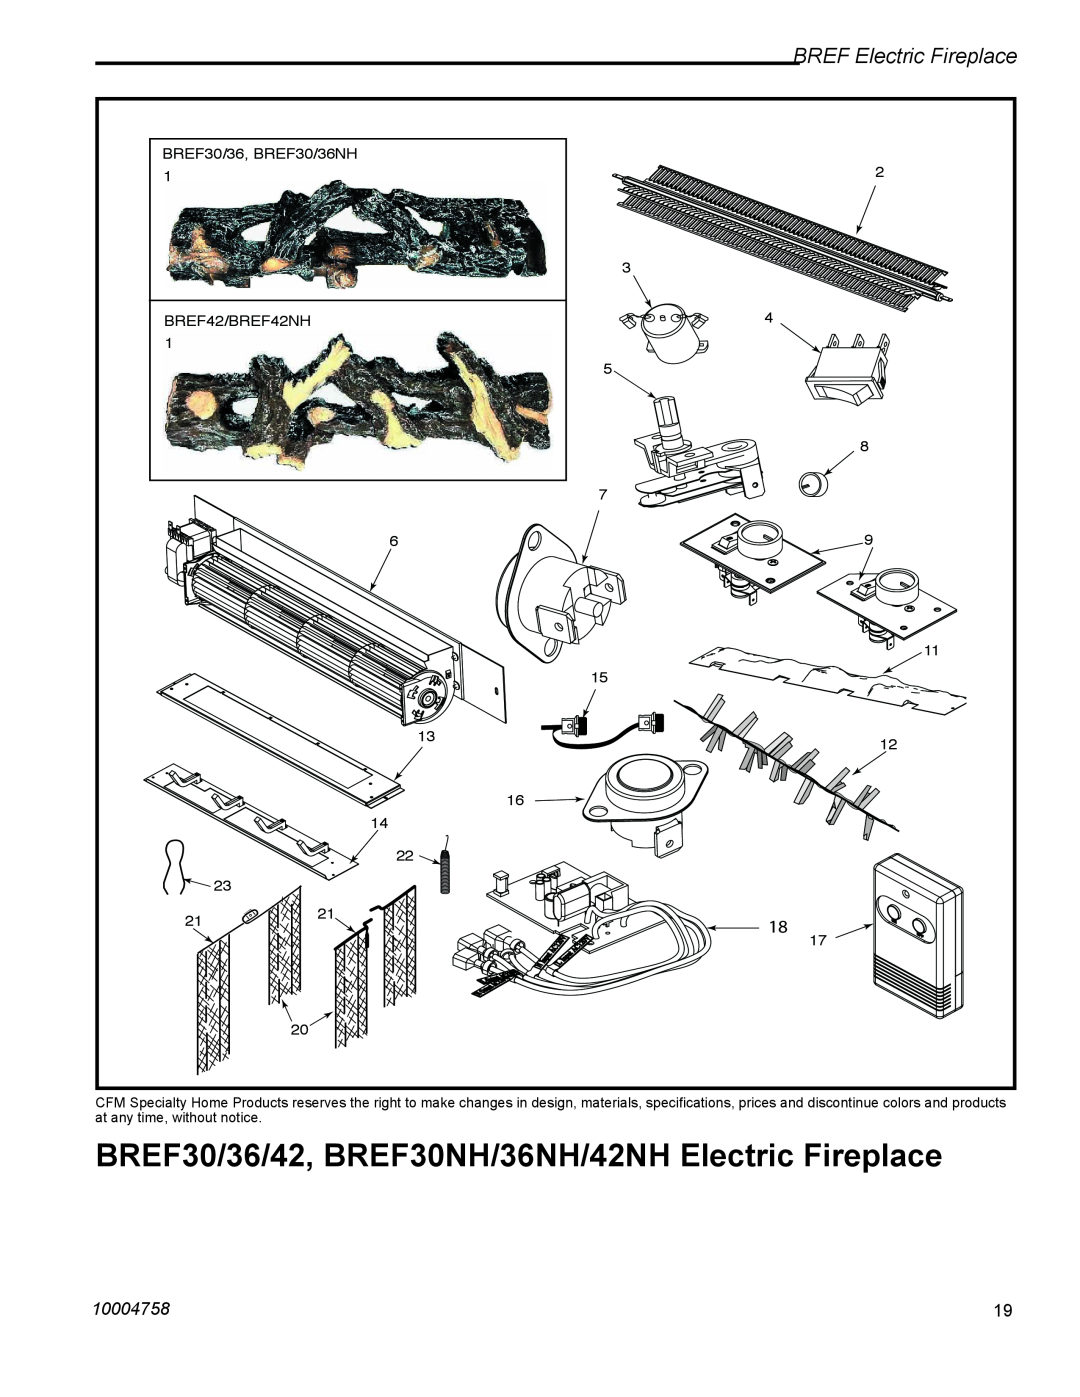 Vermont Casting BREF36R/42R manual BREF Electric Fireplace, 10004758, BREF30/36, BREF30/36NH 3 BREF42/BREF42NH 